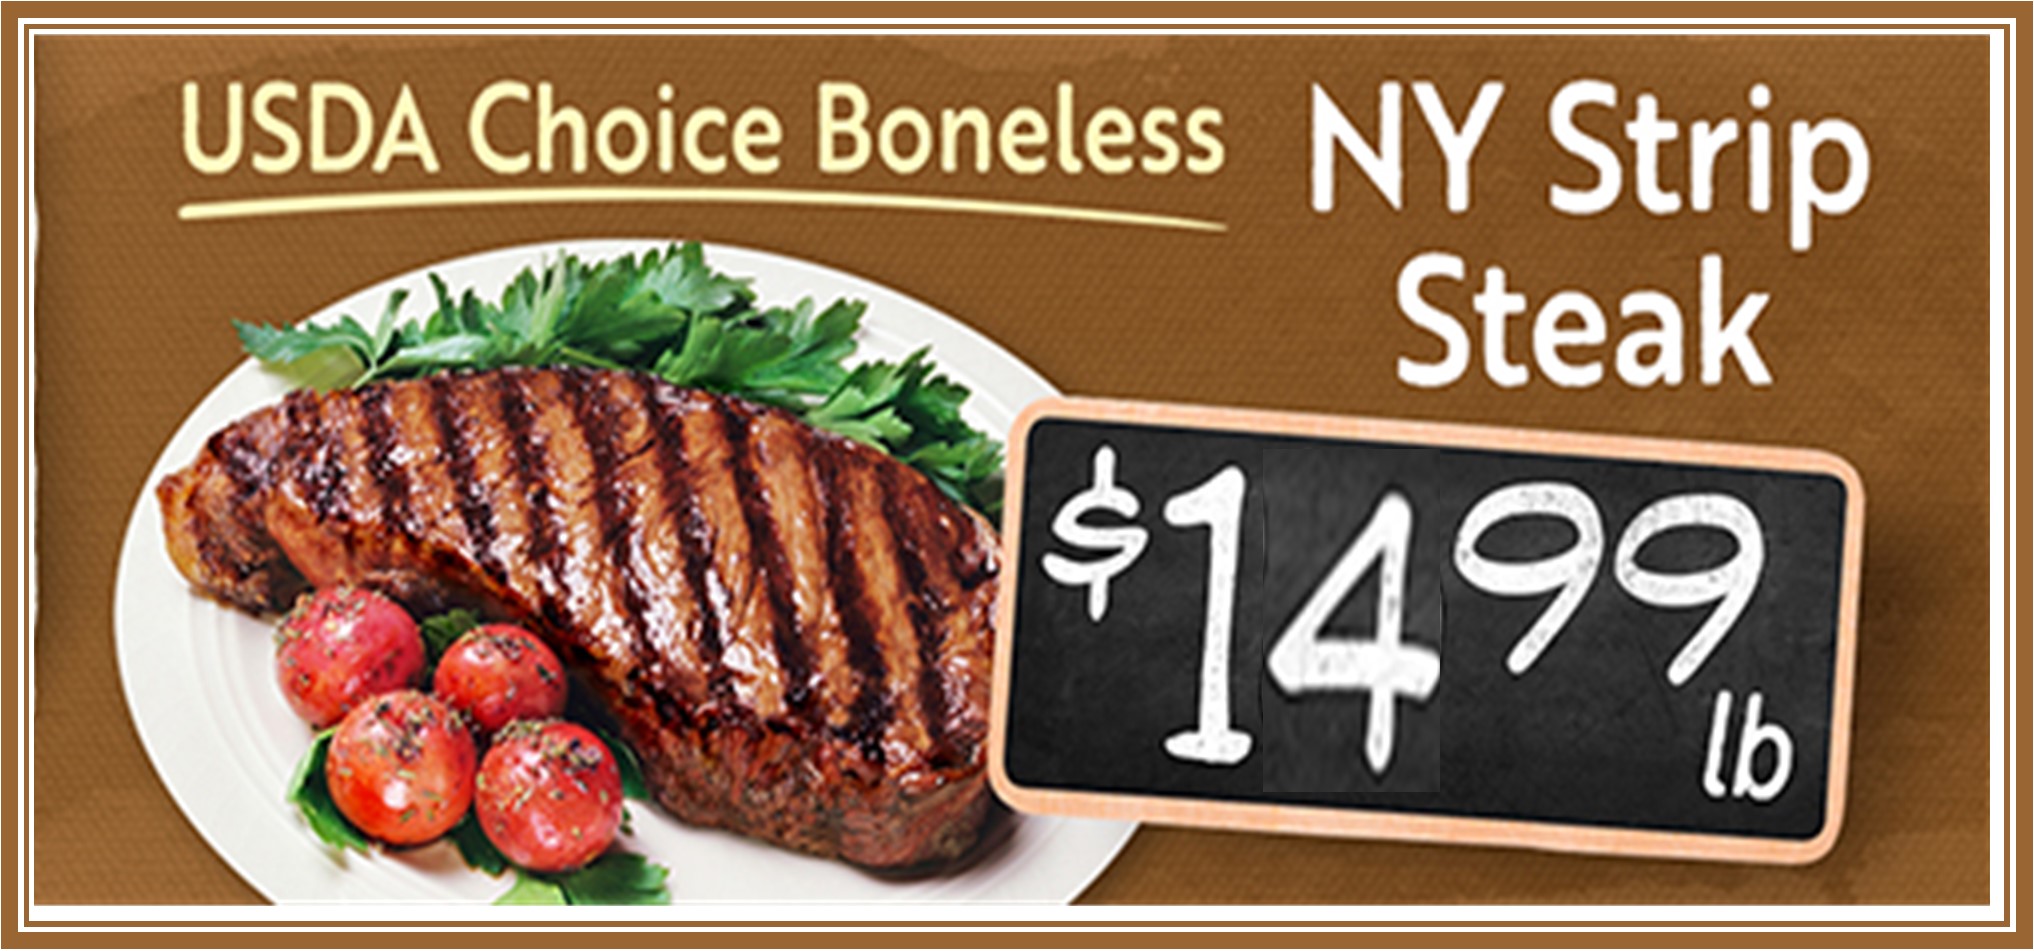 NY Strip Steak 1499.jpg